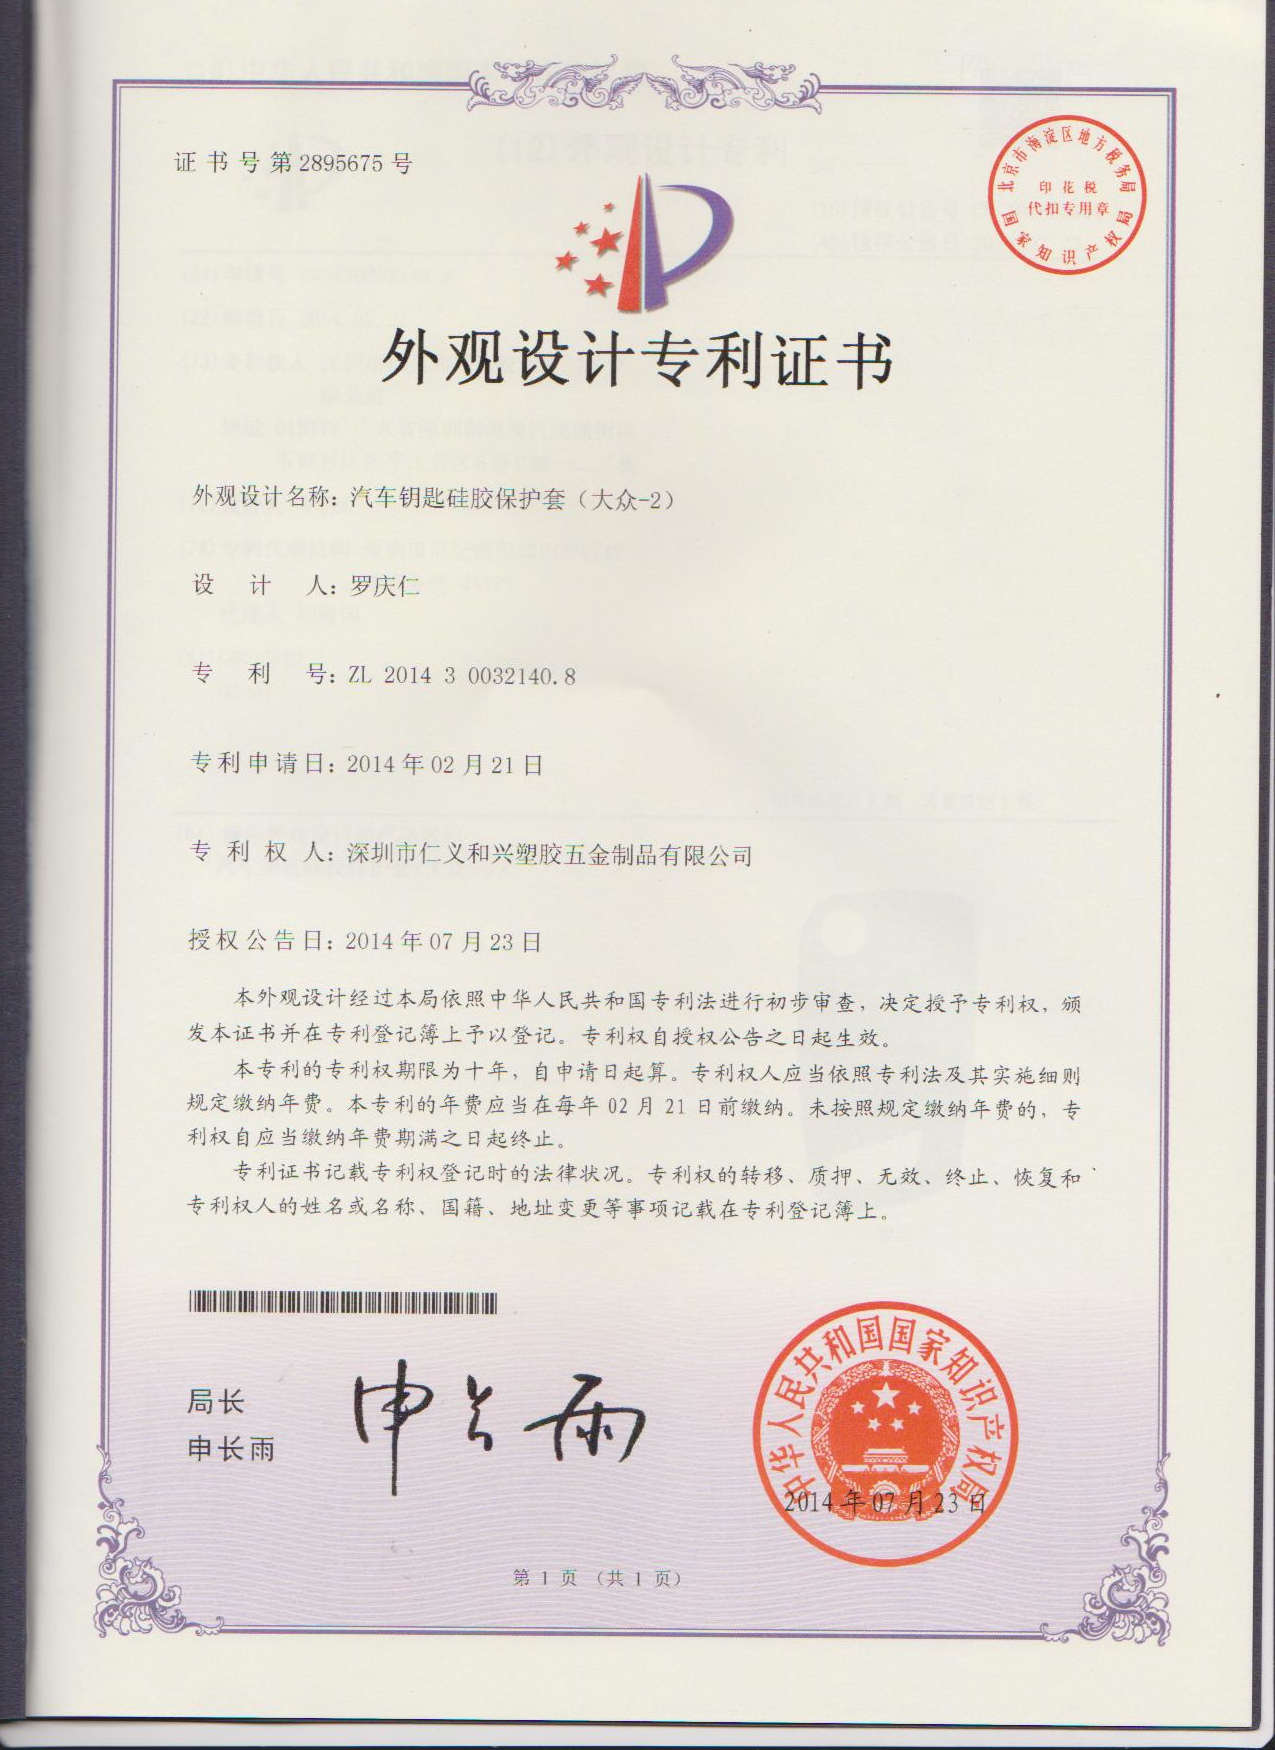 Shenzhen RYHX silicone car key appearance patent-ZL 2014 3 0032140.8